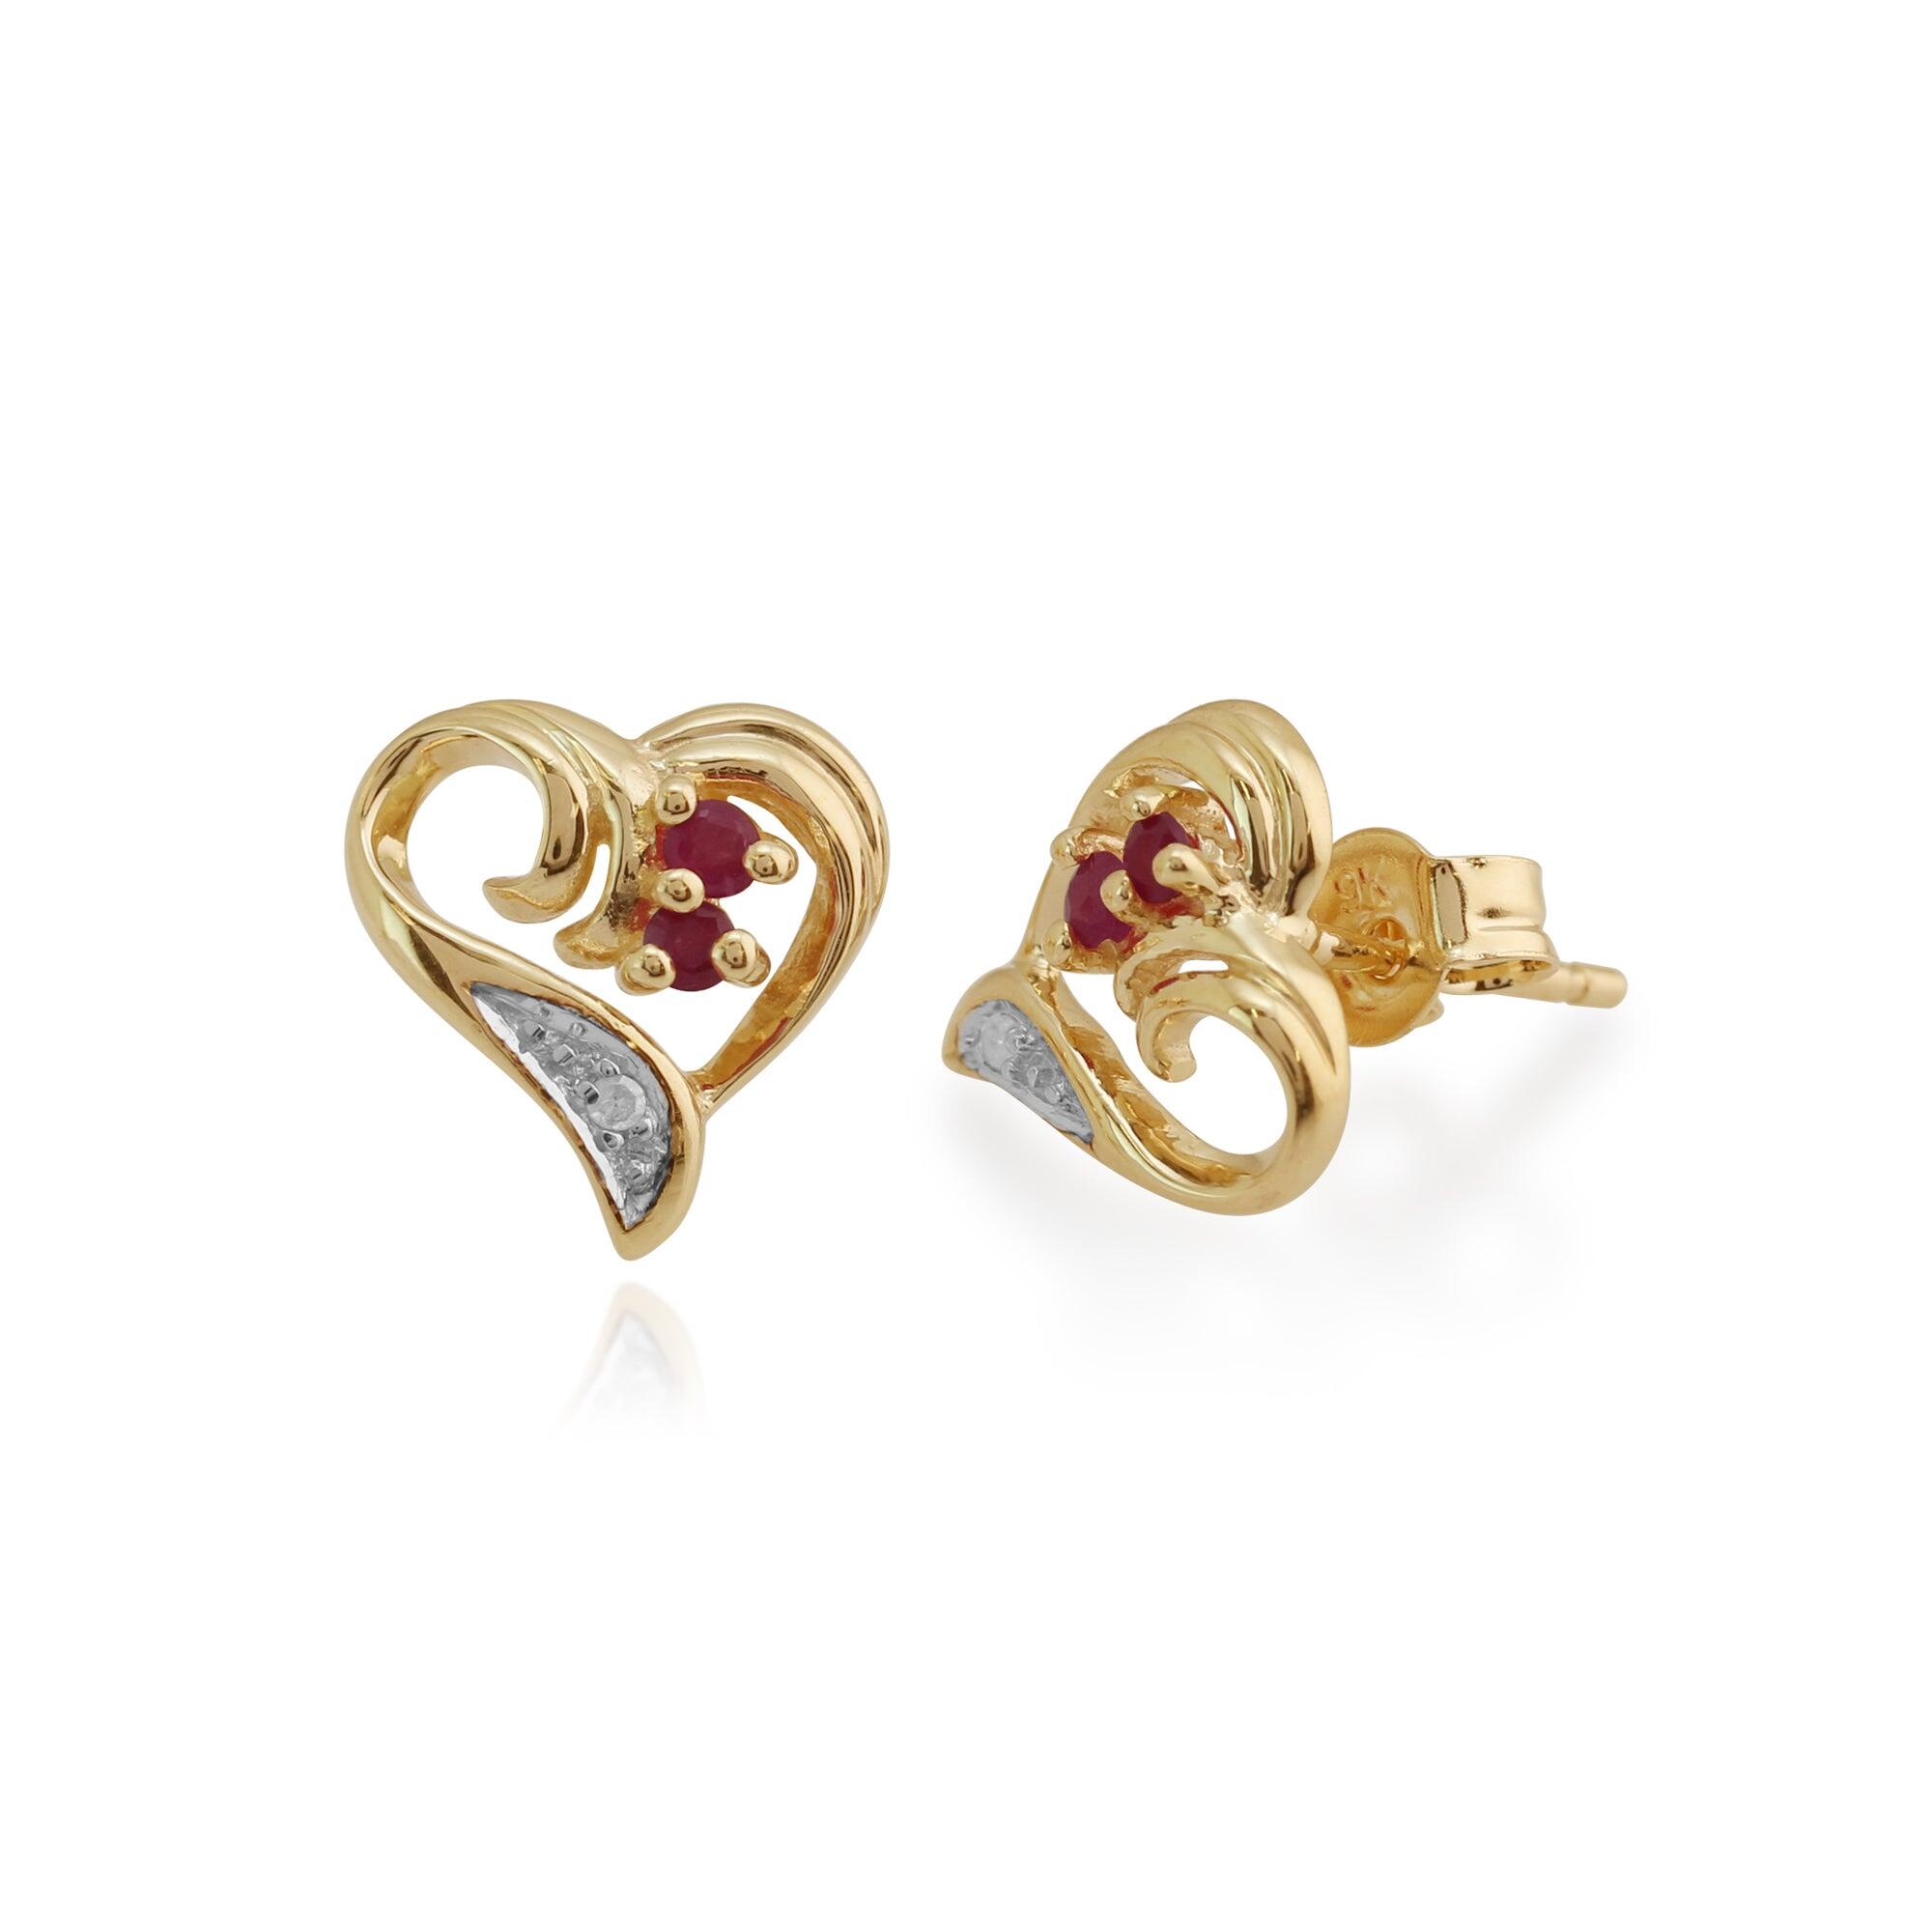 Classic Ruby & Diamond Swirled Love Heart Stud Earrings in 9ct Gold